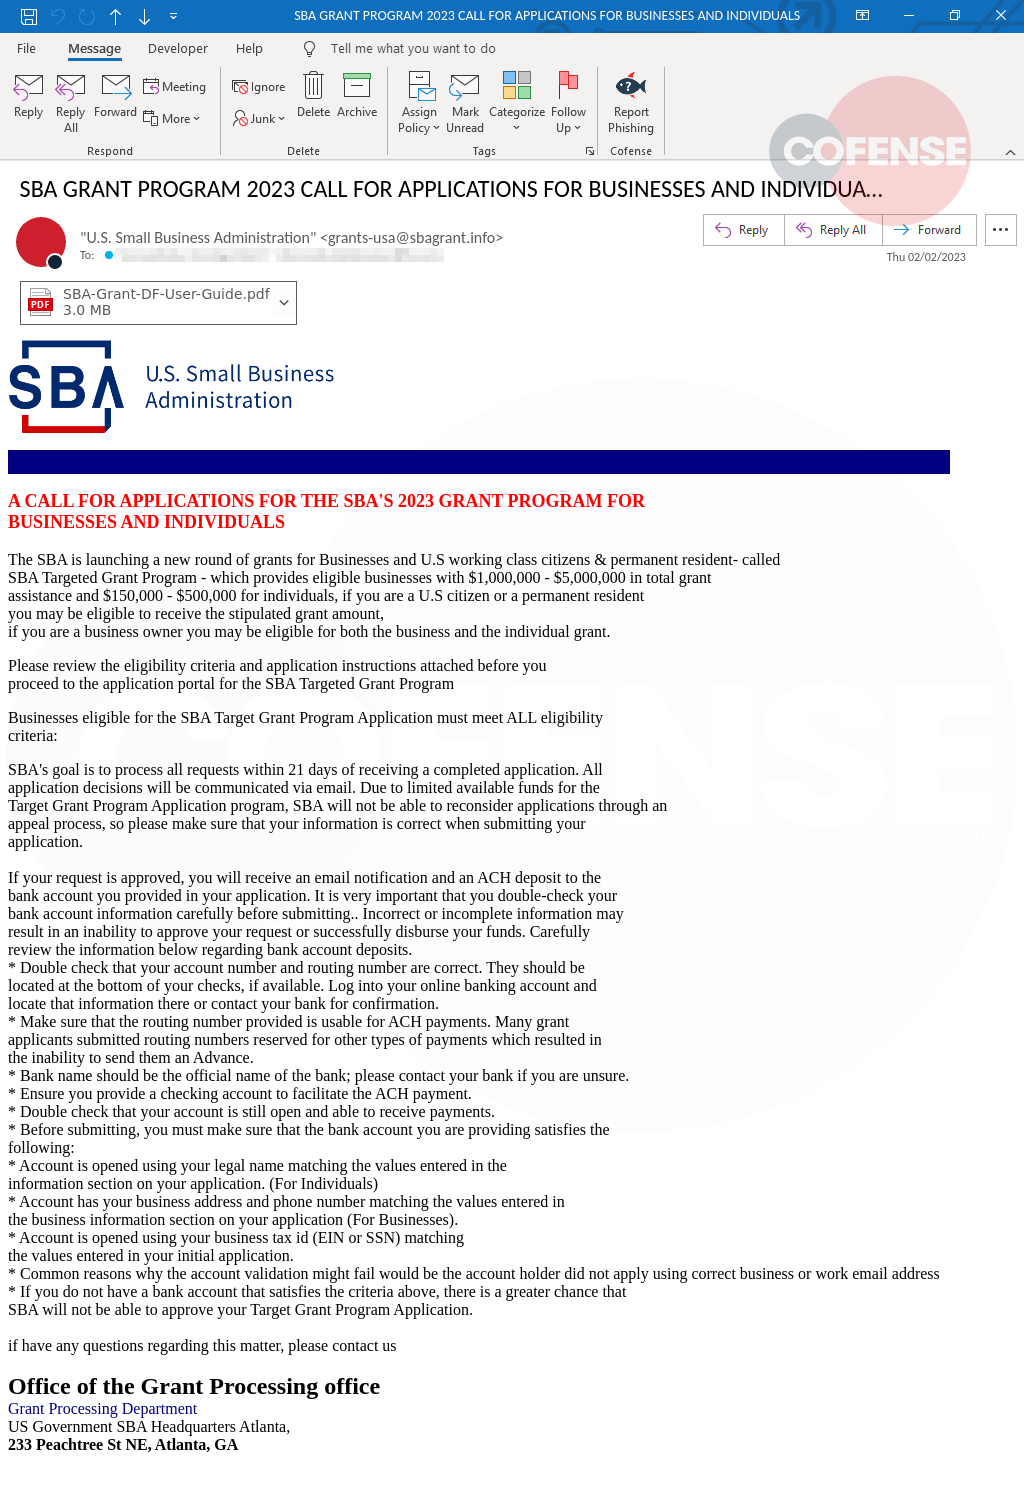 SBA Grant Scam Email Body 